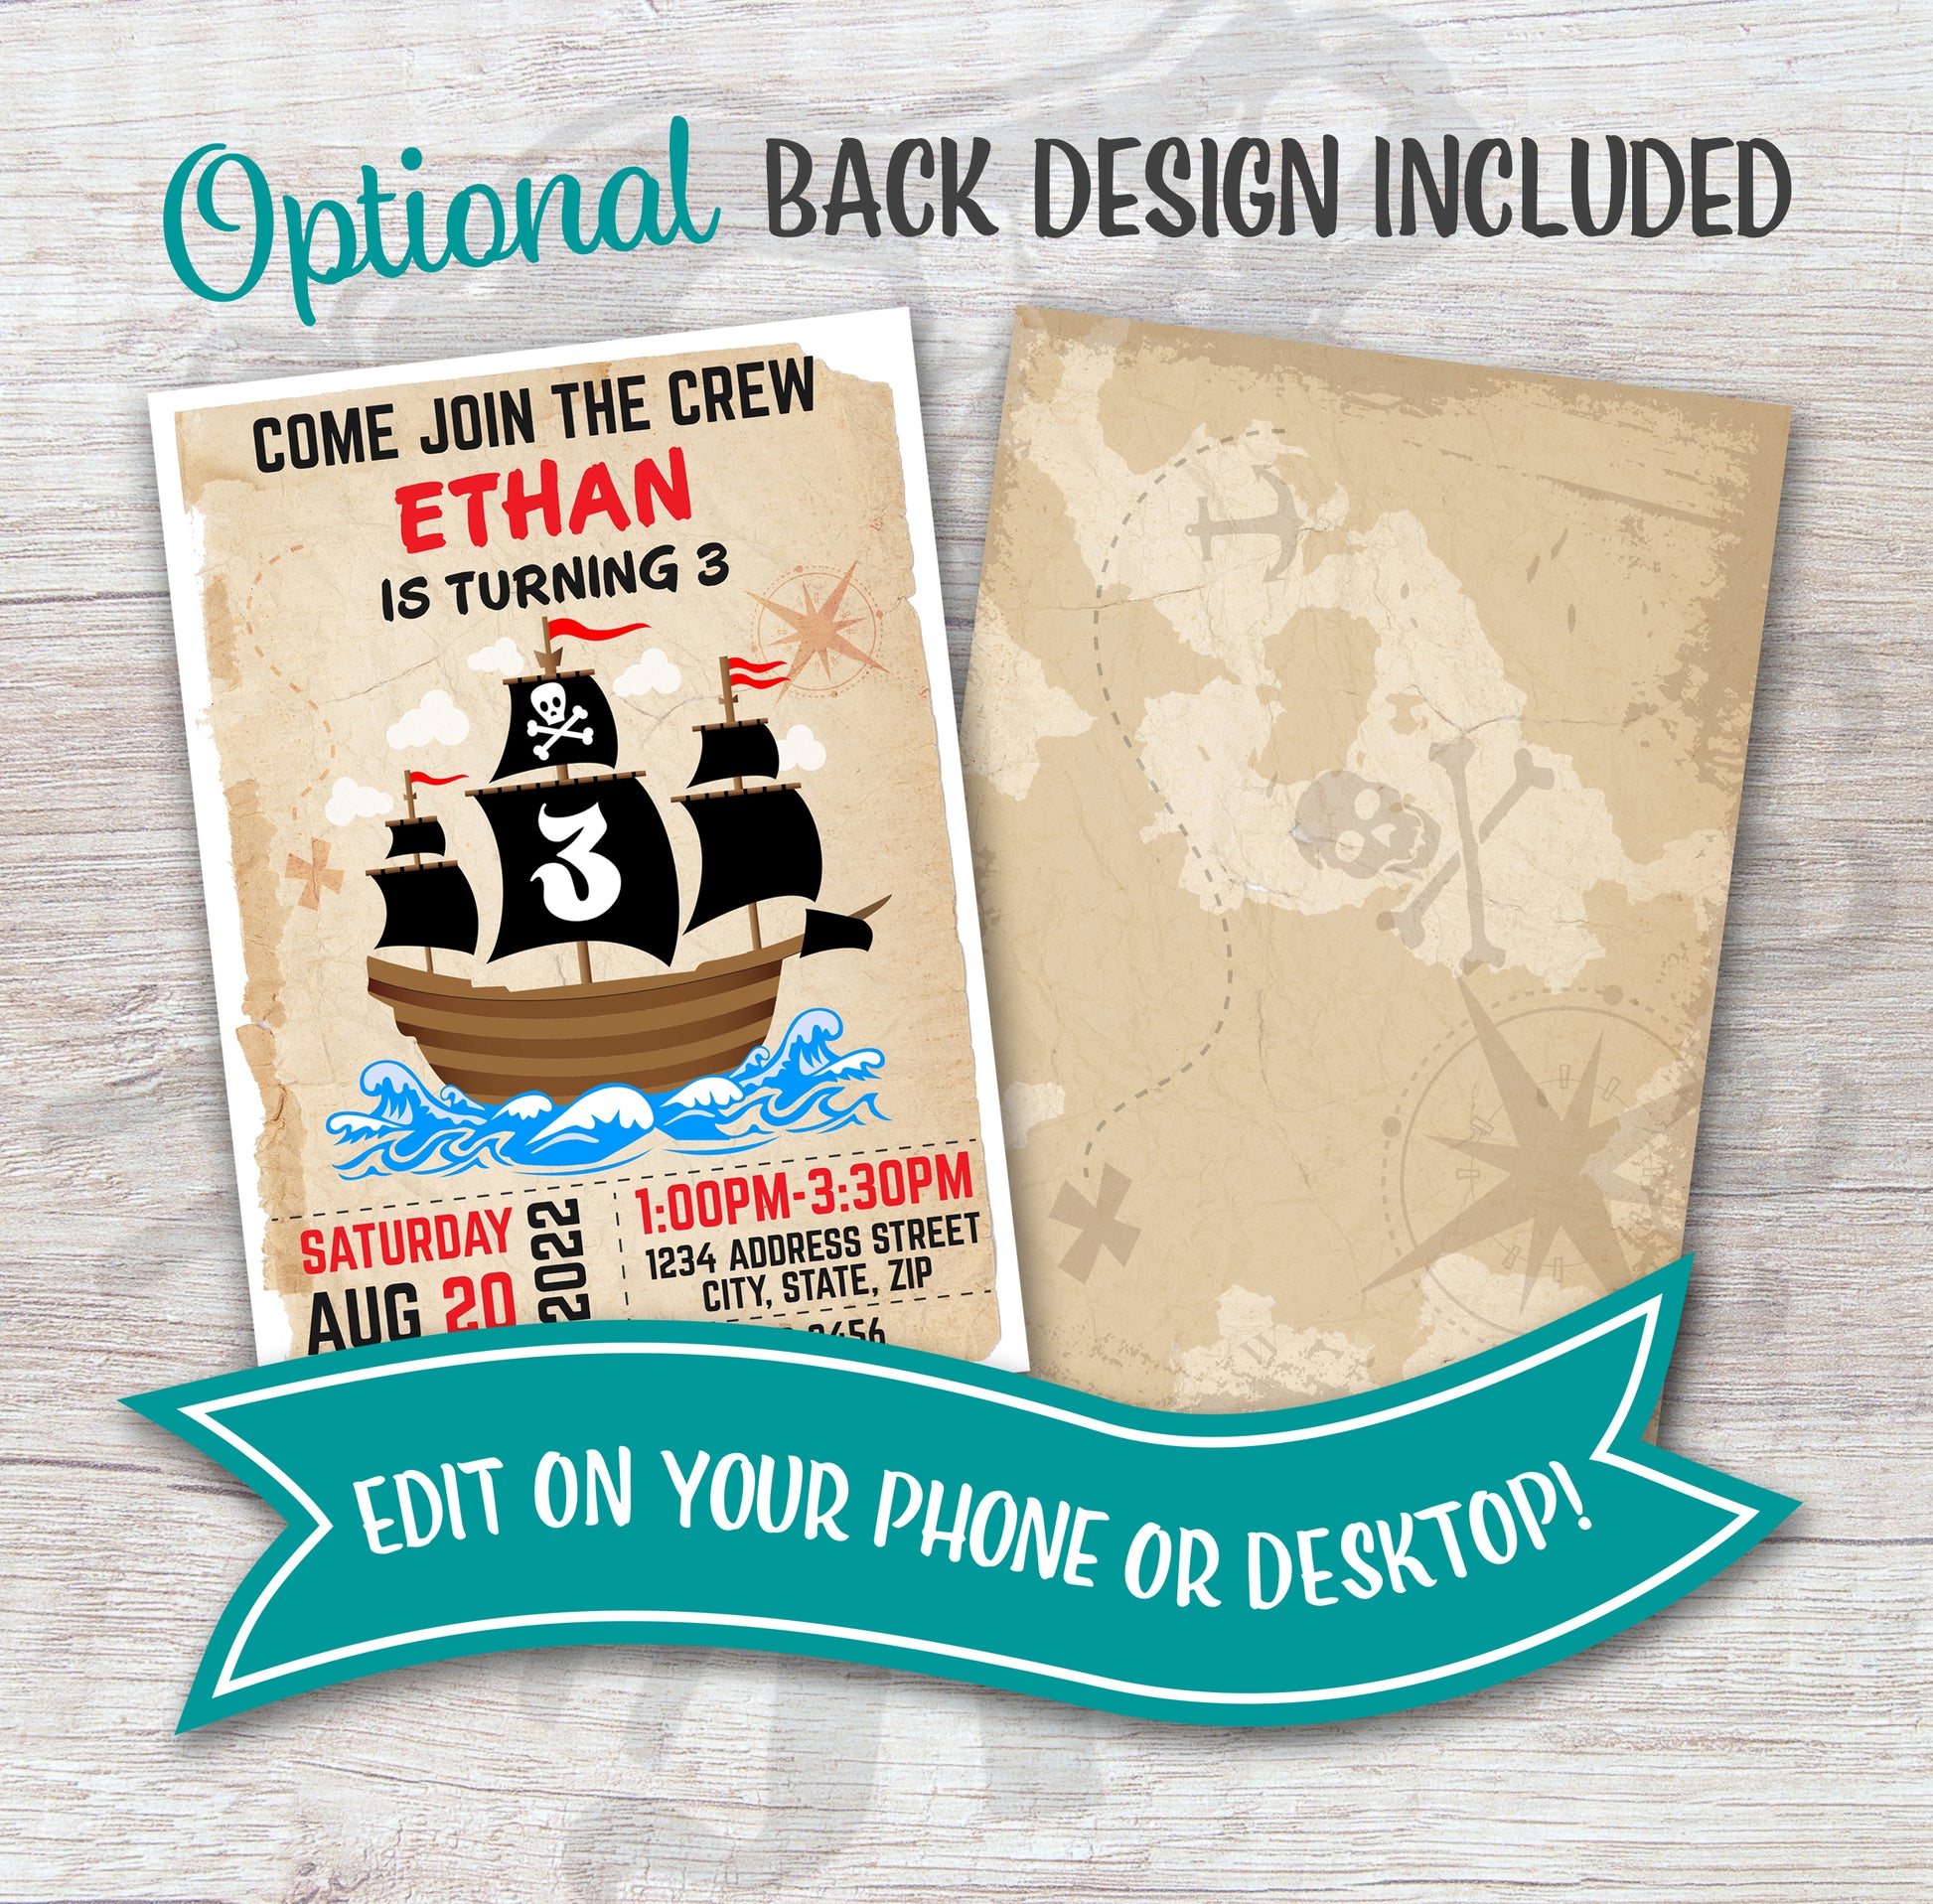 Pirate birthday invitation with back design